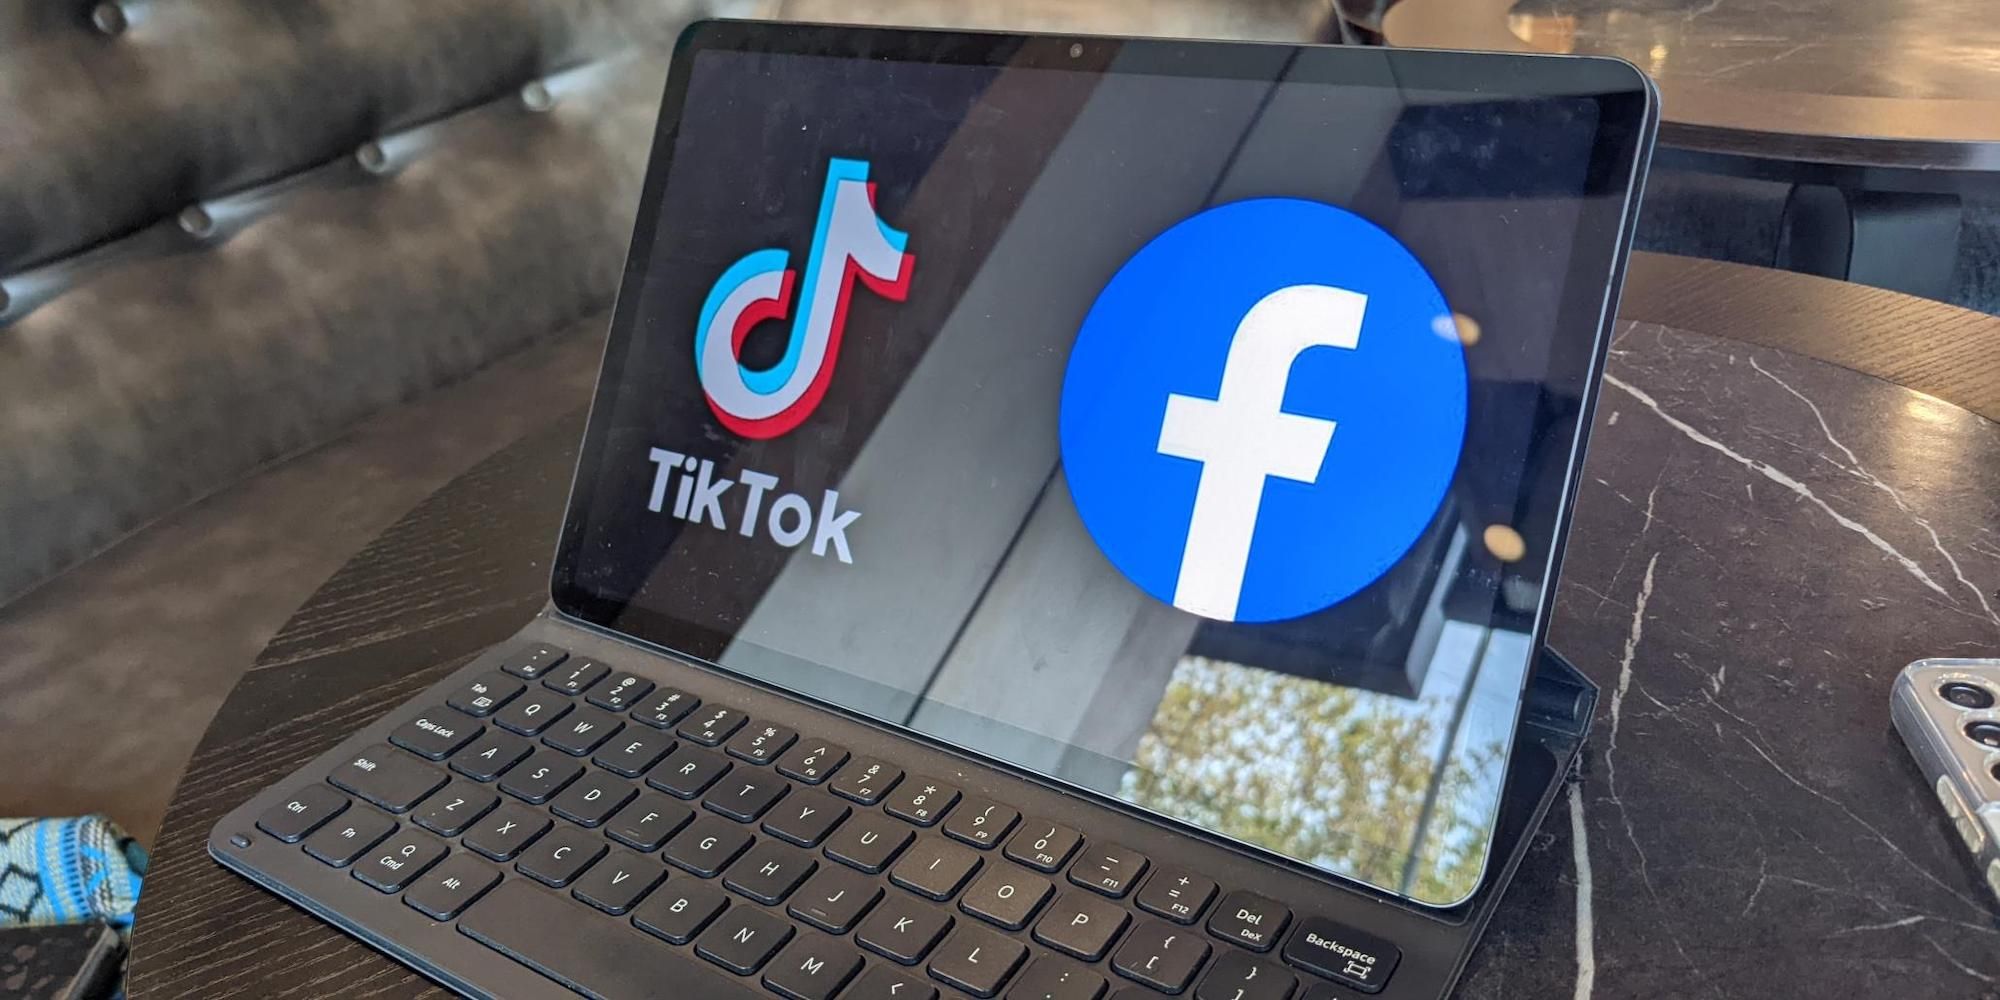 Facebook TikTok Logos On Laptop